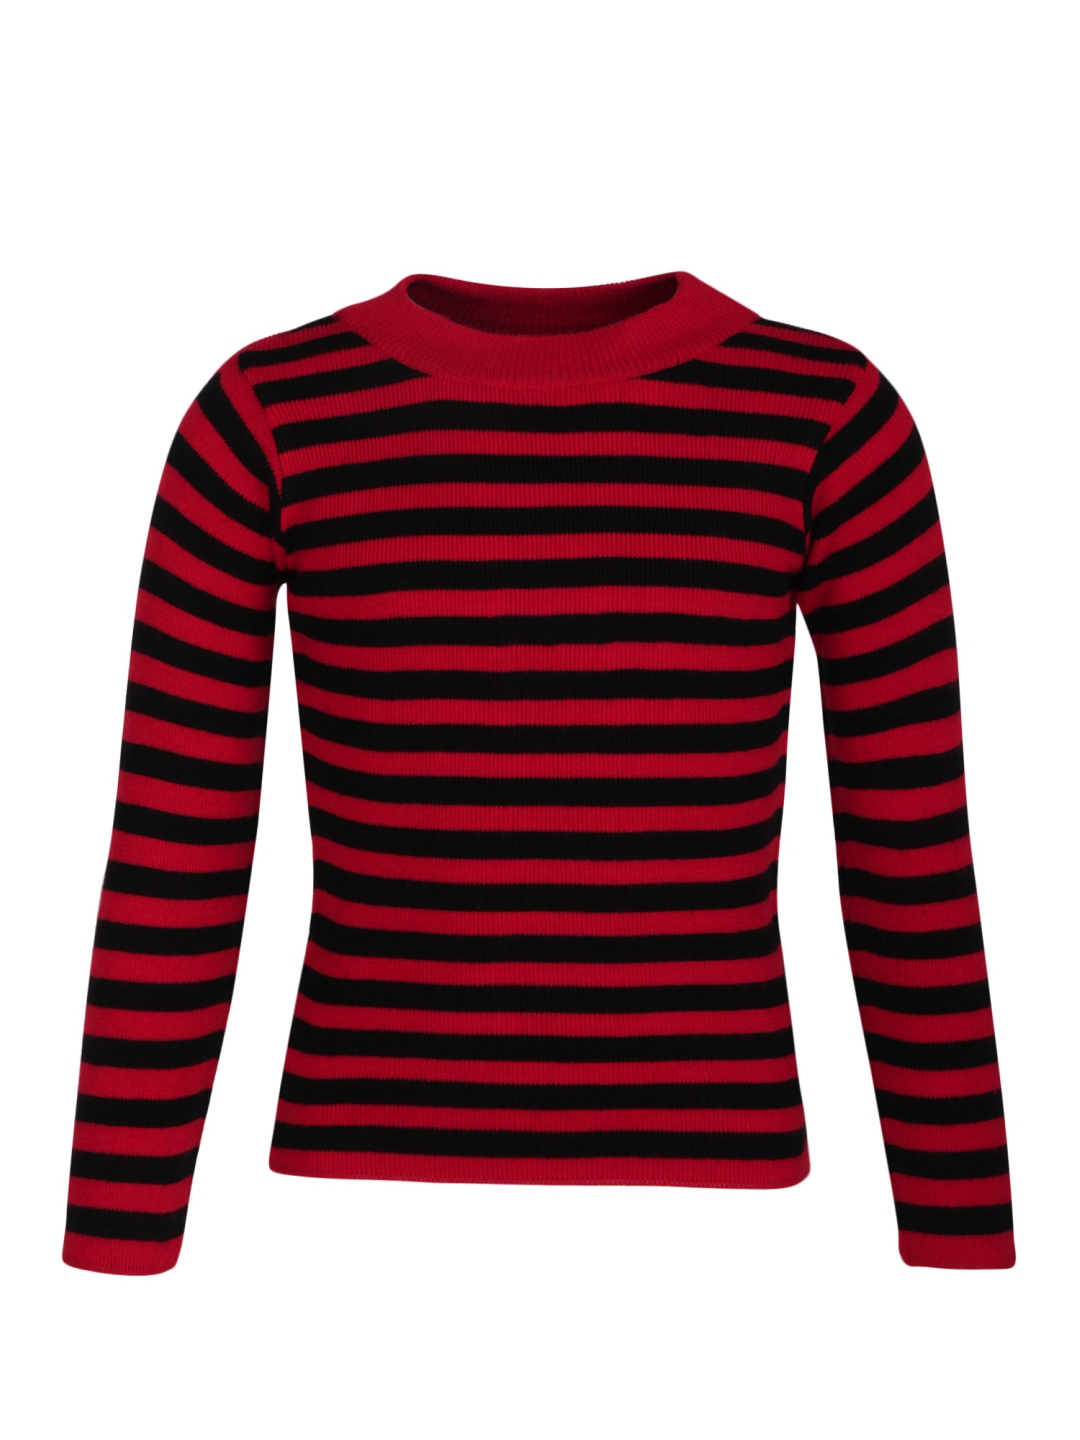 red and black striped sweatshirt